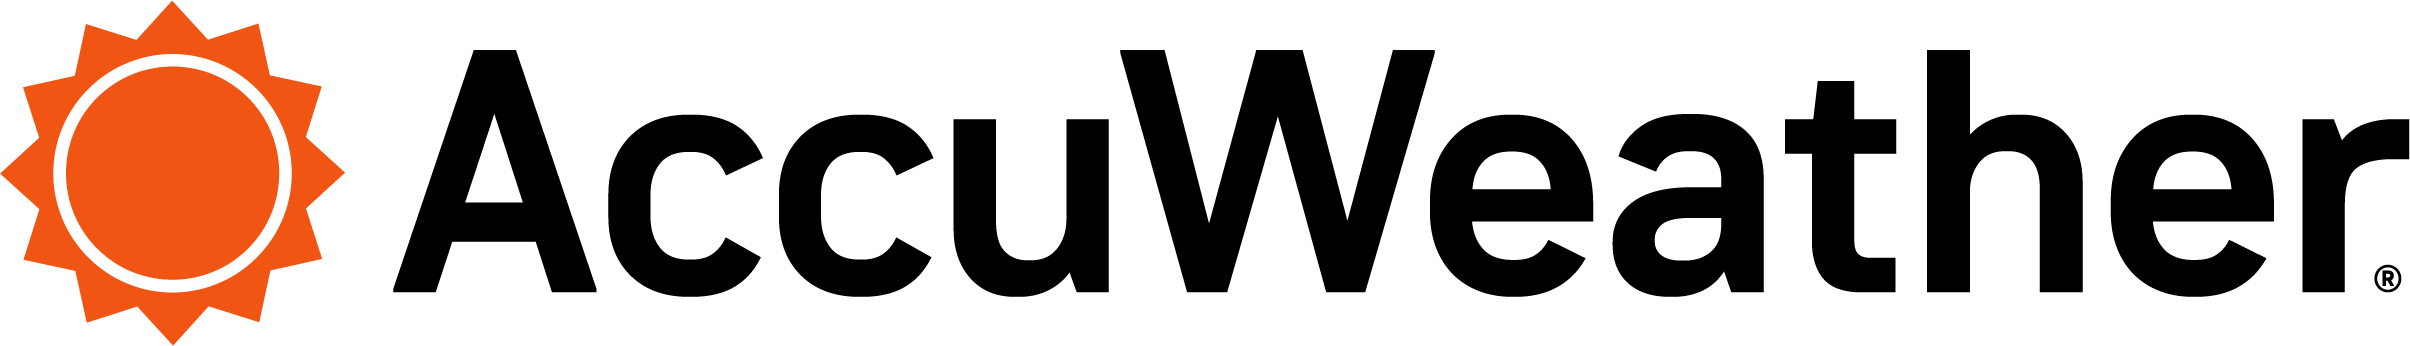 Clickable Accuweather logo.